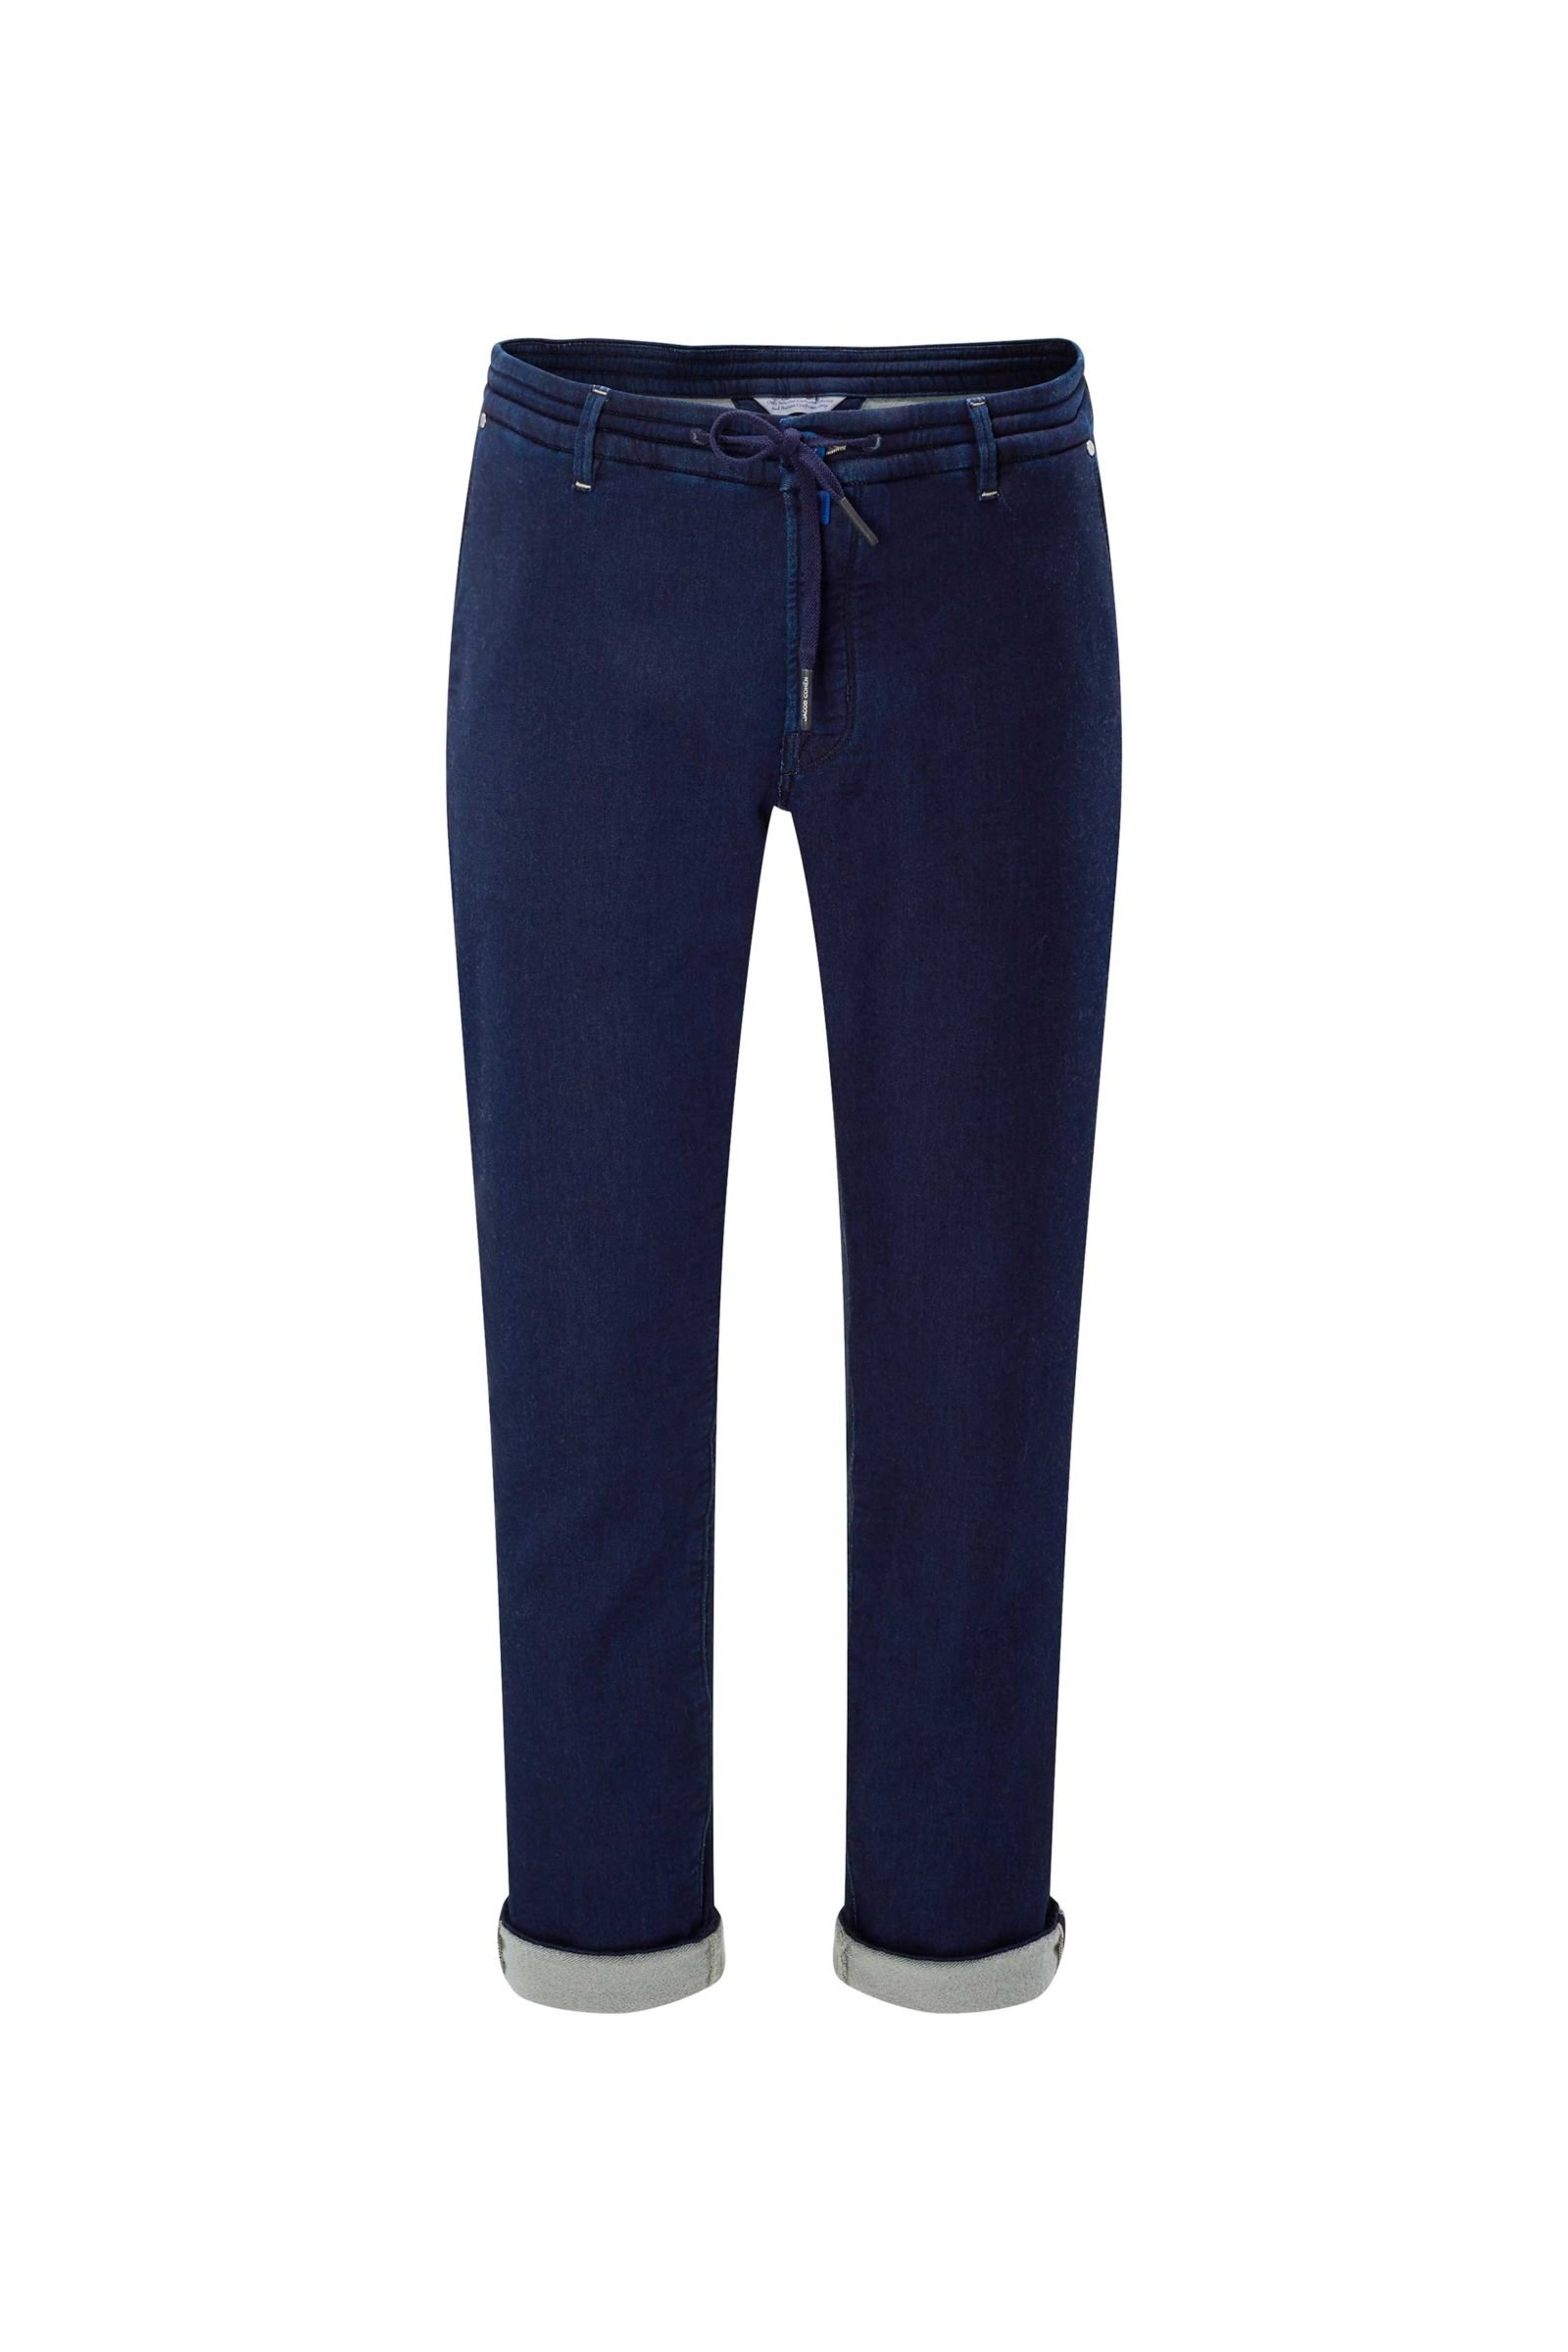 Jeans jogger pants 'J676 Relax Comfort Slim Fit' navy